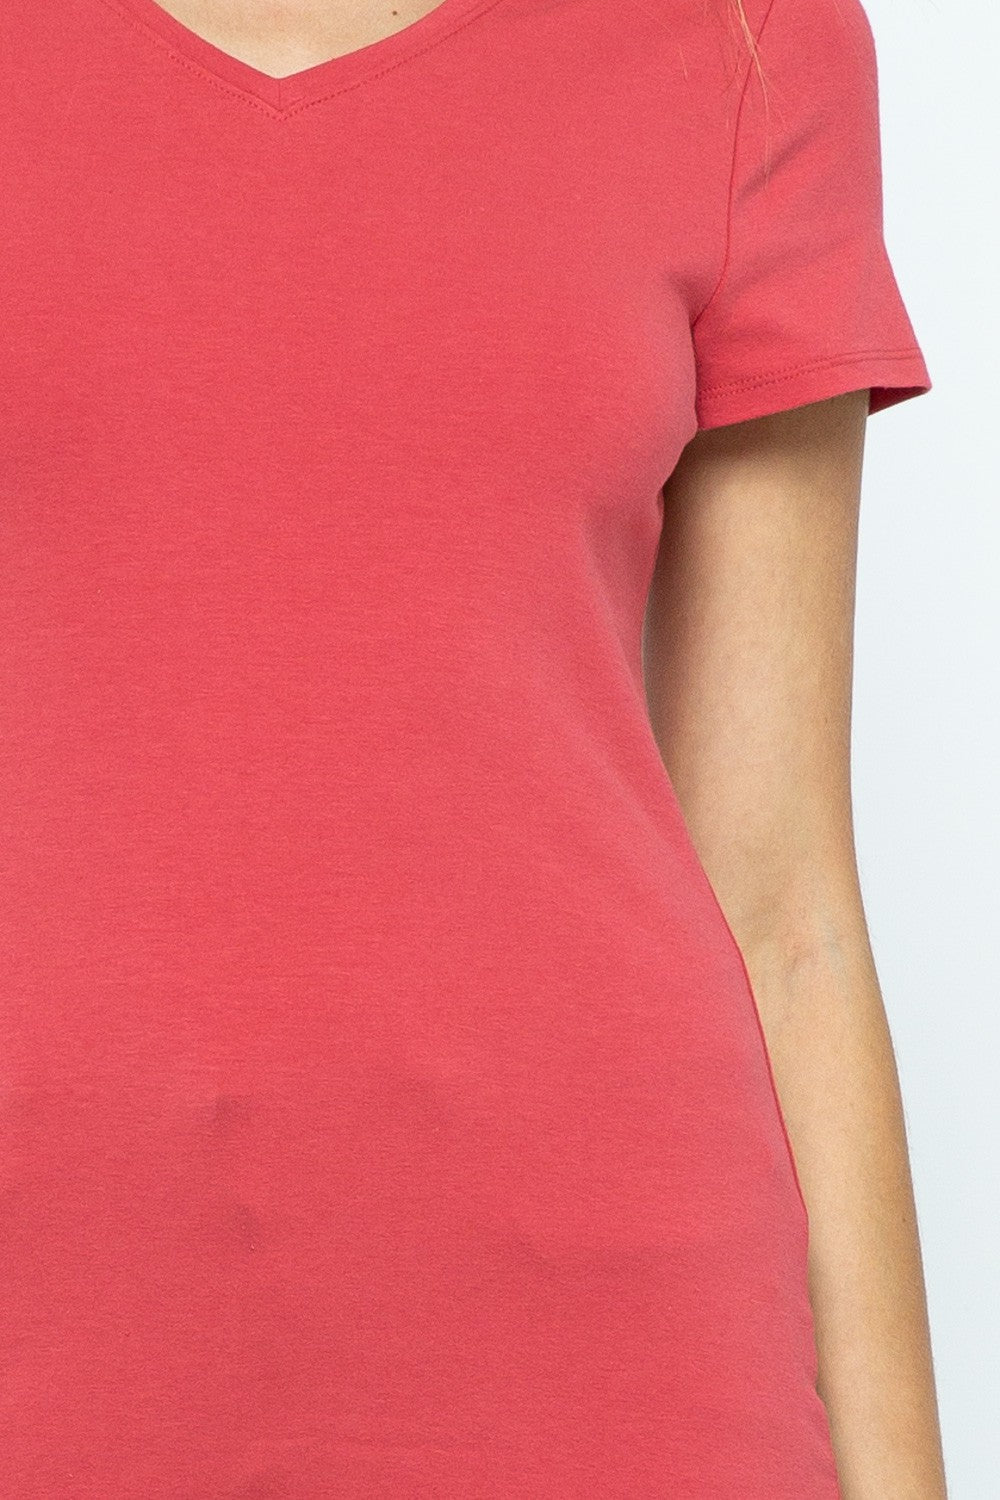 Not so Basic - Crew & V neck Essential T Shirt by Cielio